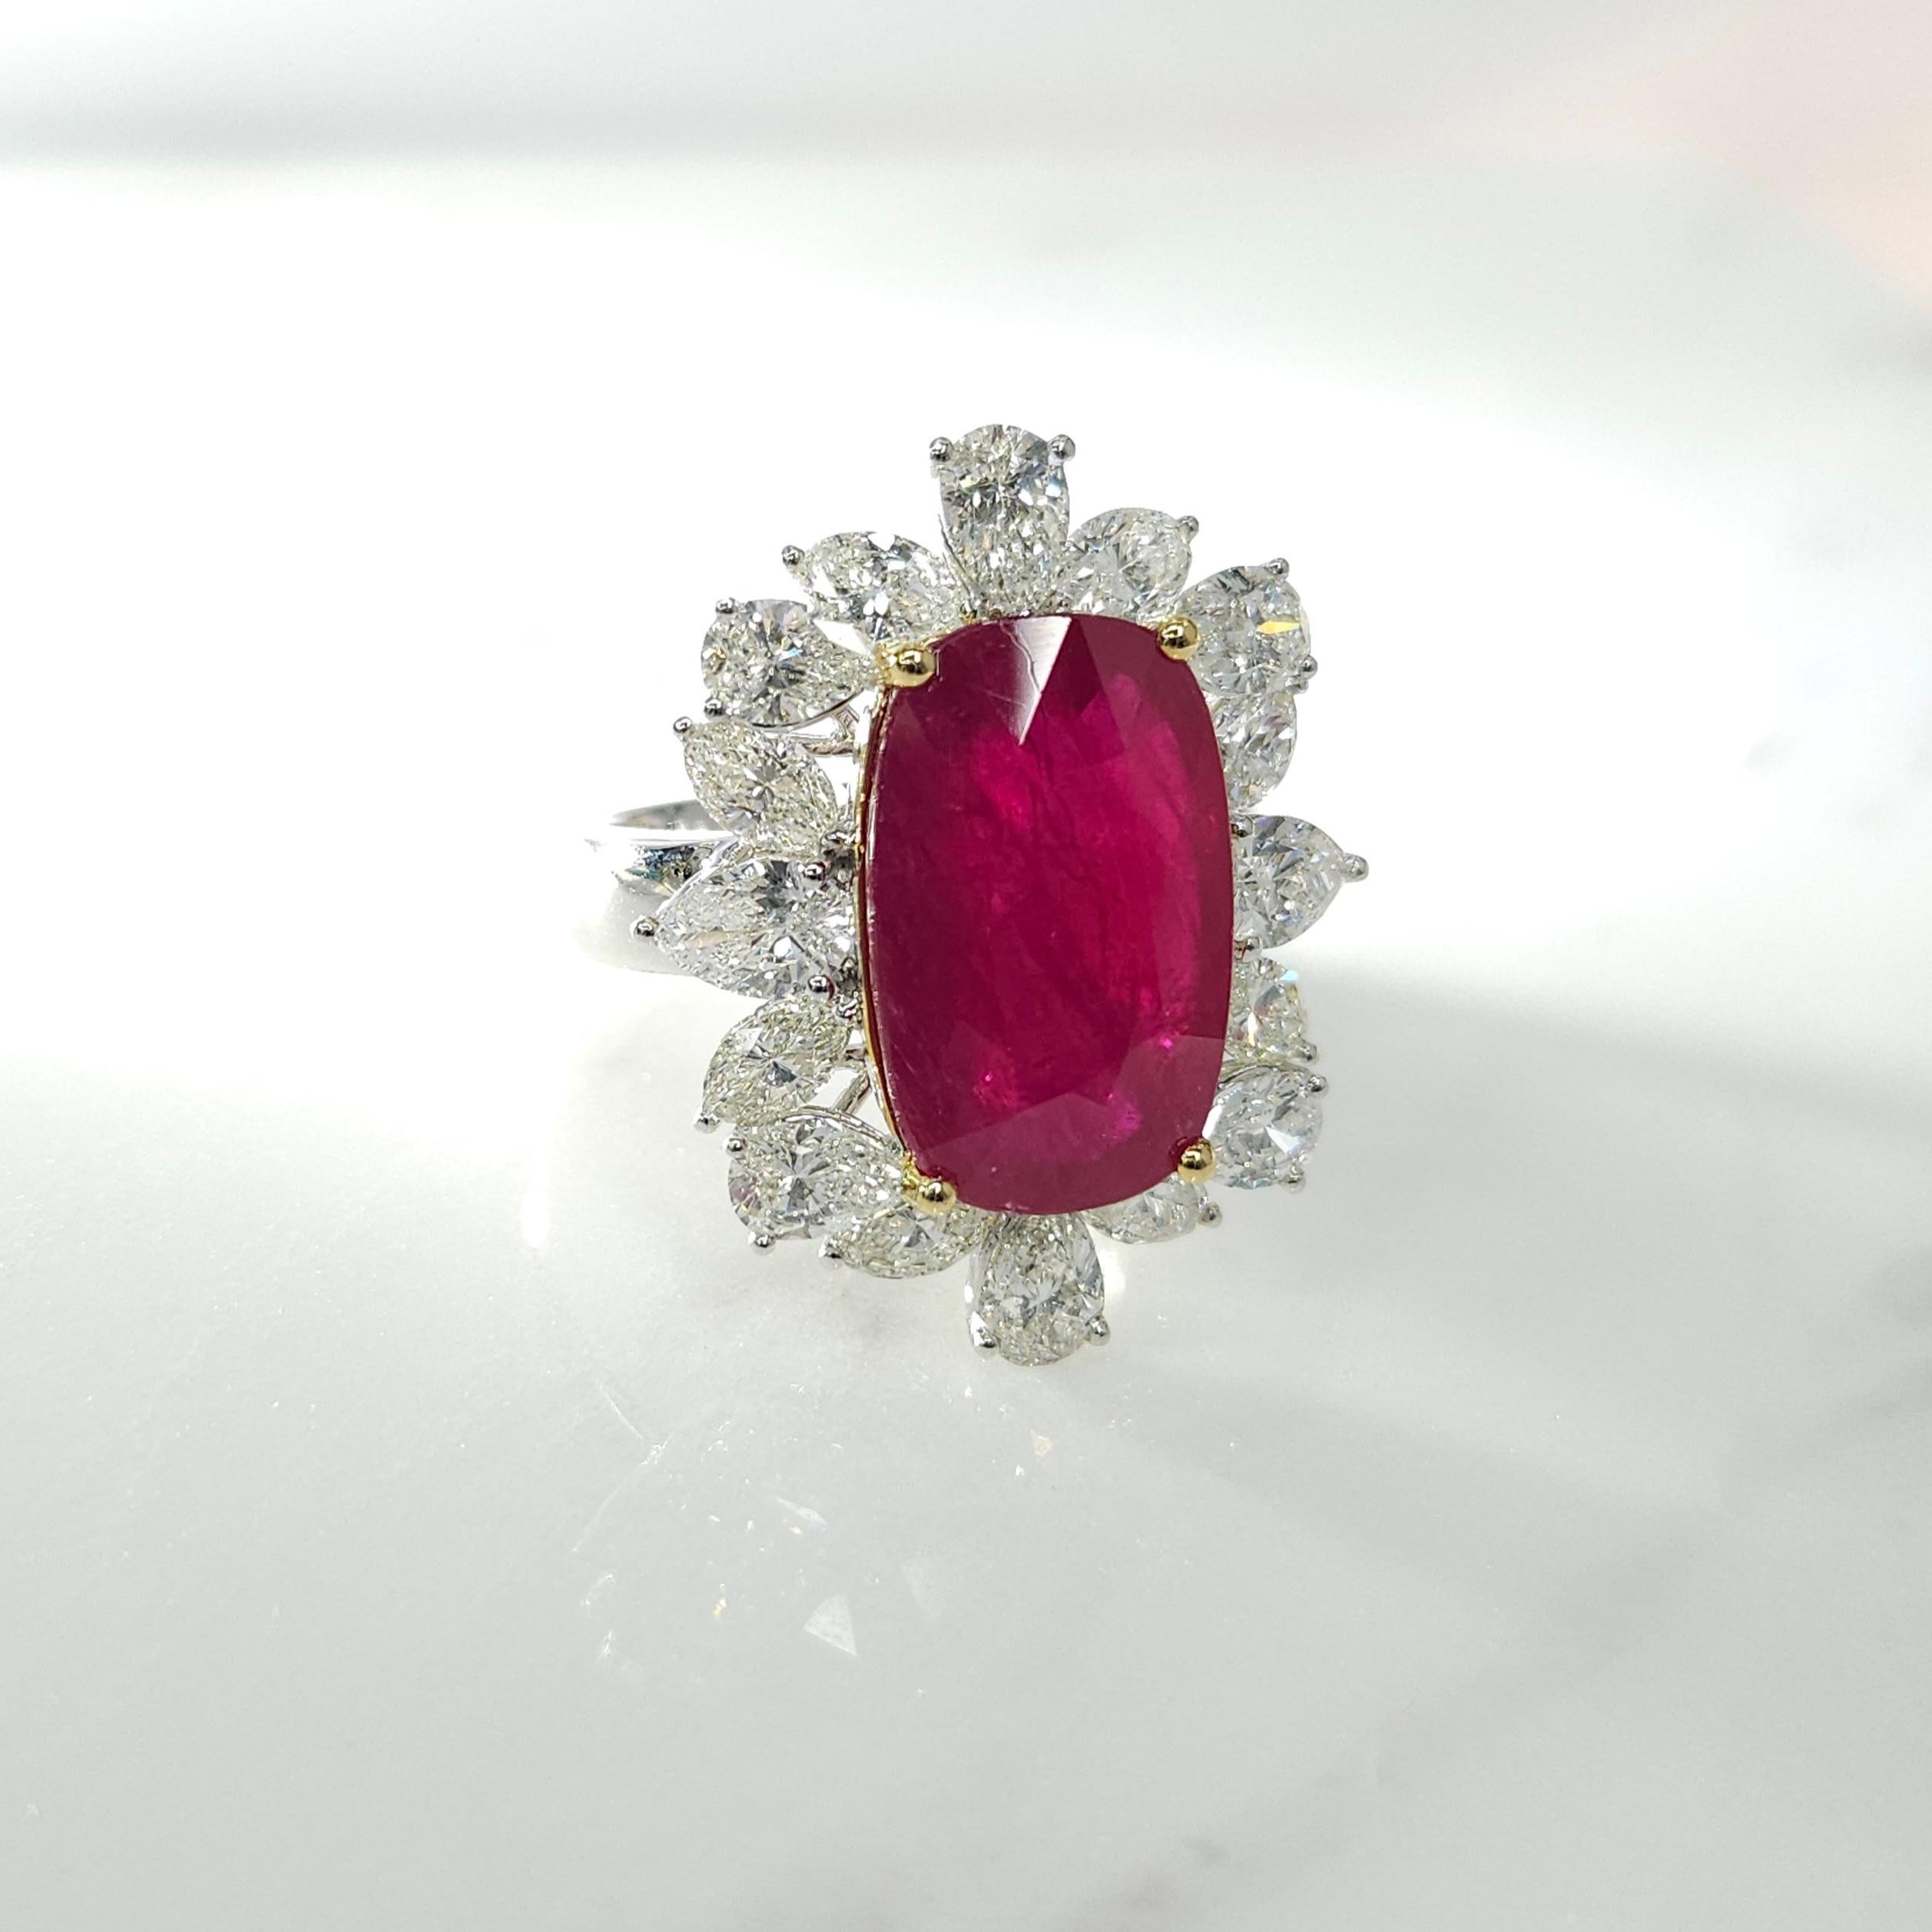 IGI Certified 8.75 Carat Ruby & 3.14 Carat Diamond Ring in 18K White Gold For Sale 2